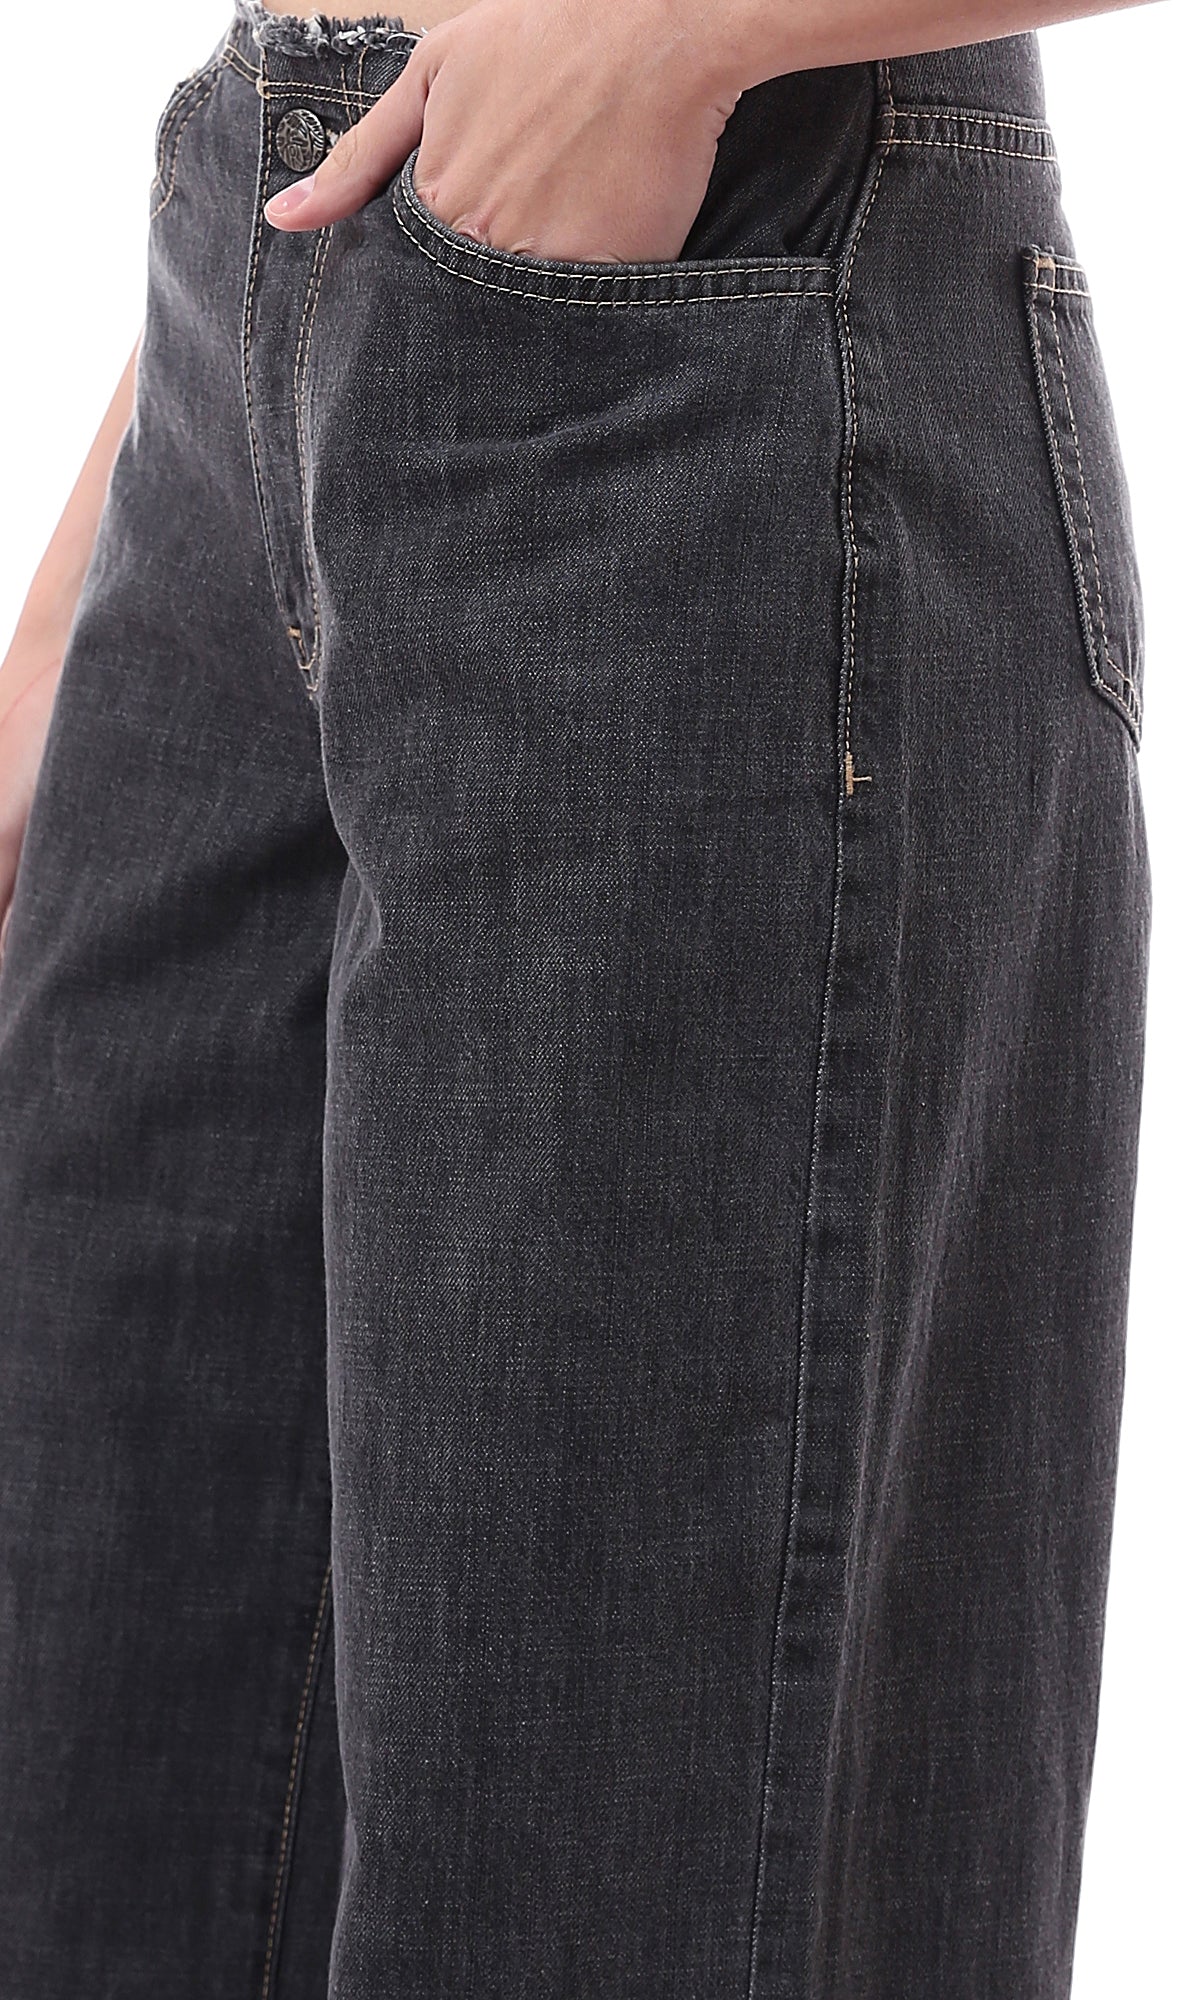 O174630 Fashionable Wide Jeans With 5 Pockets - Heather Black